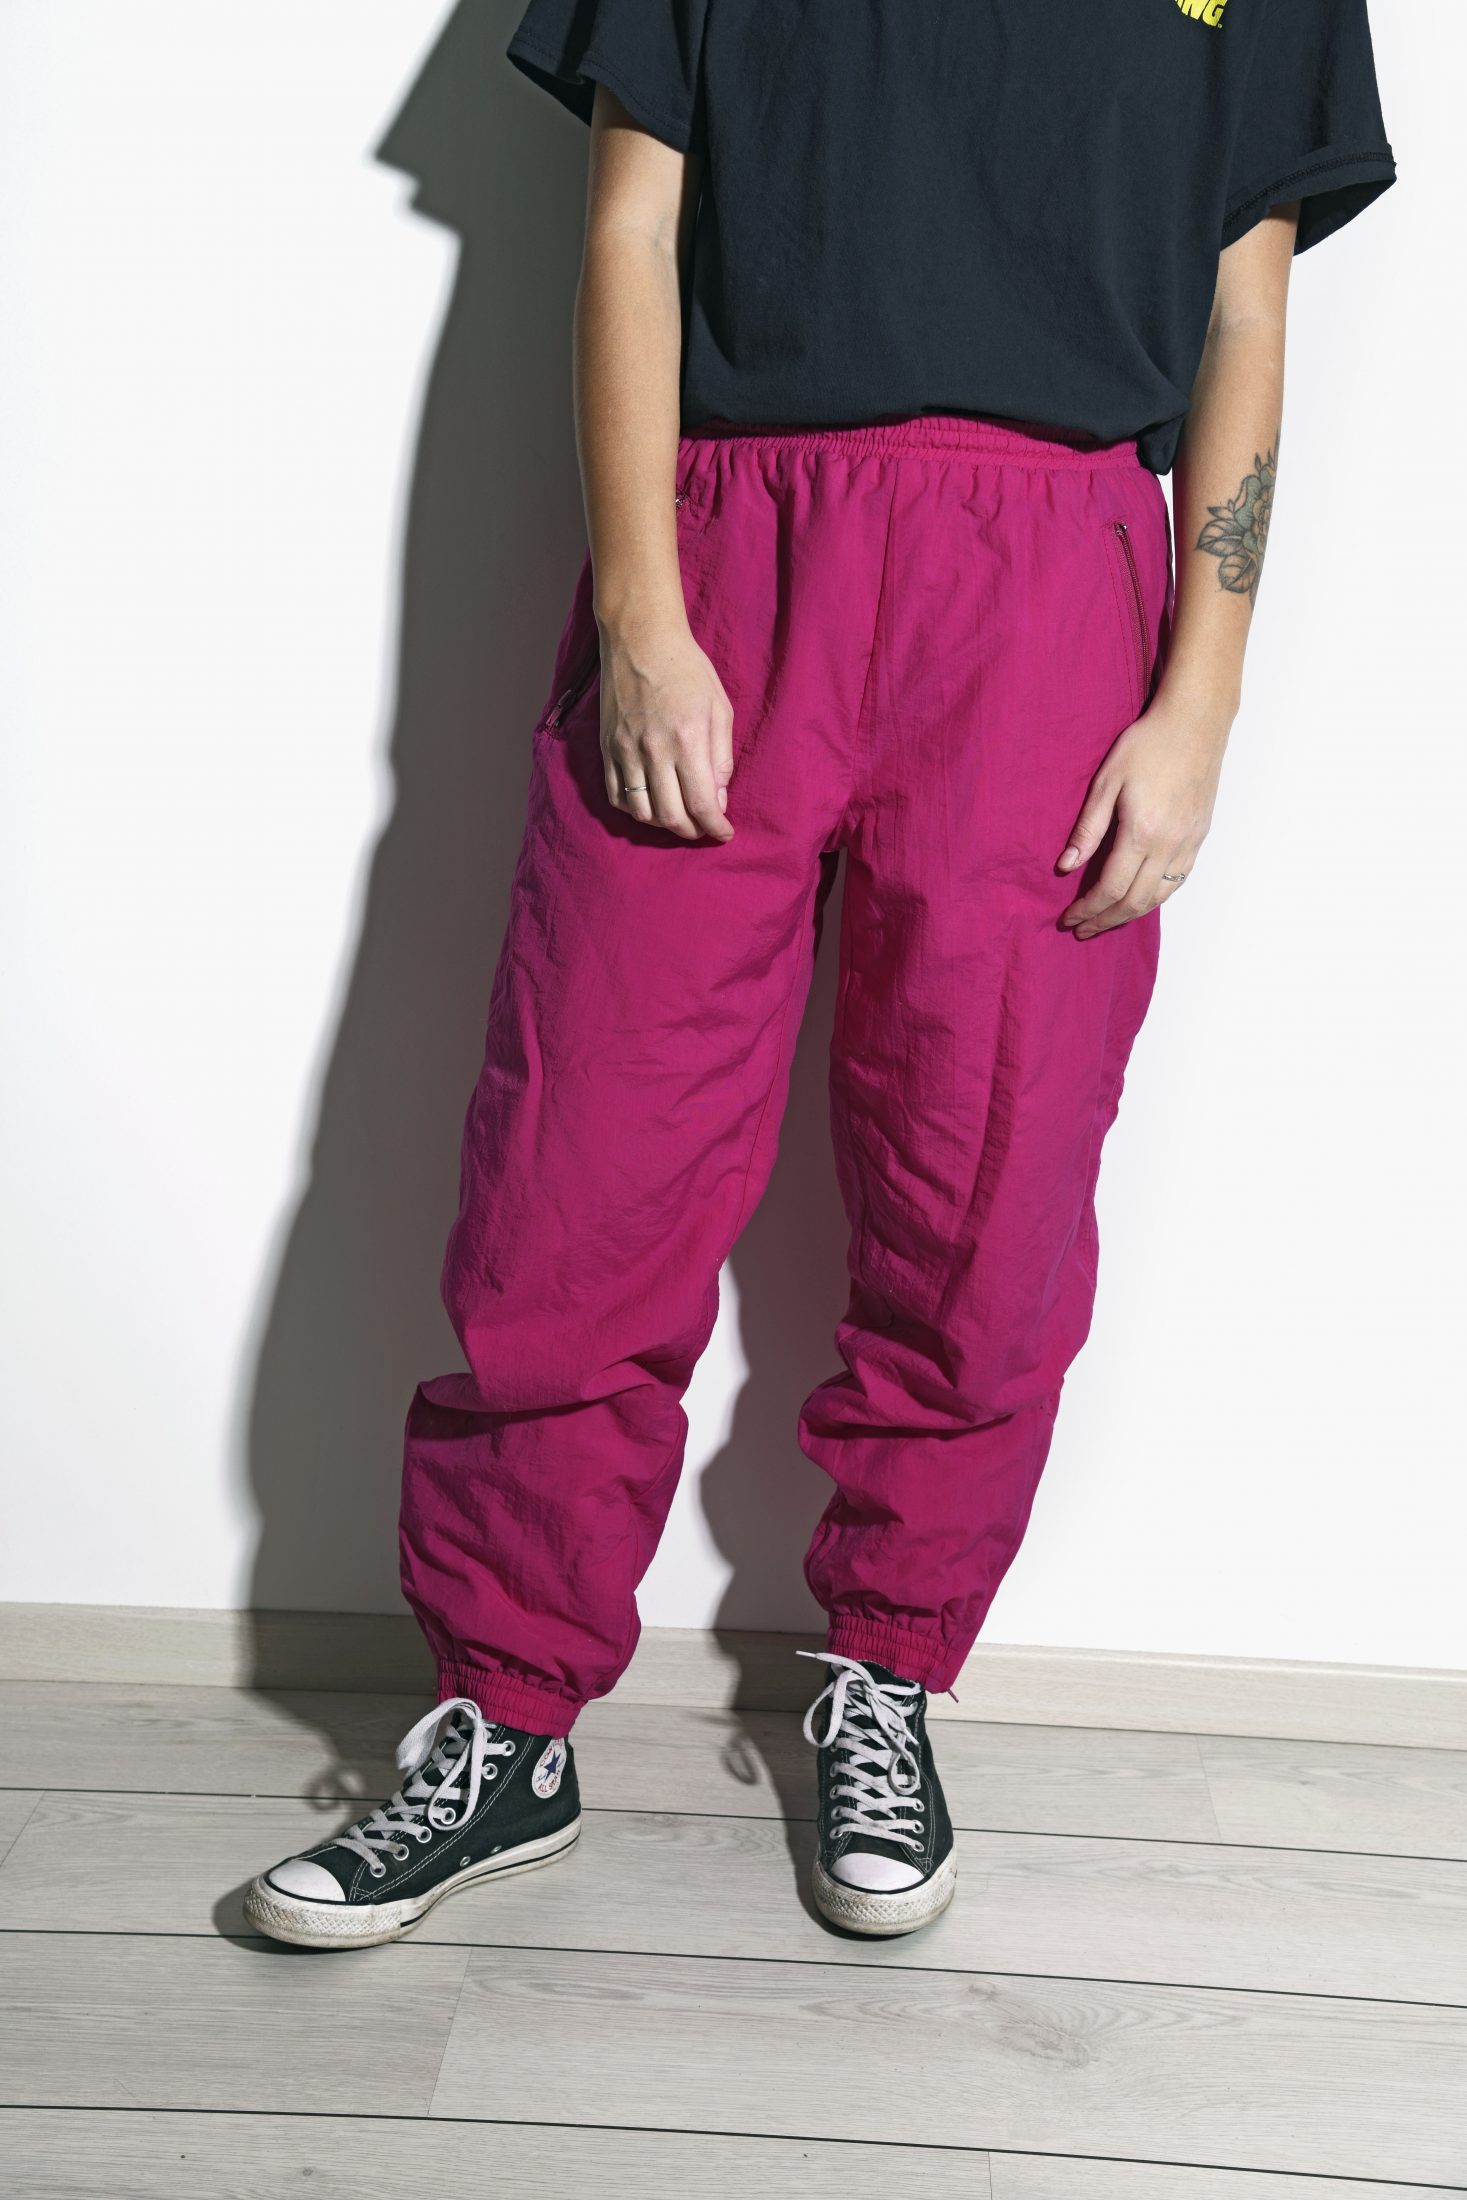 Retro pink ski pants | HOT MILK vintage clothing online shop